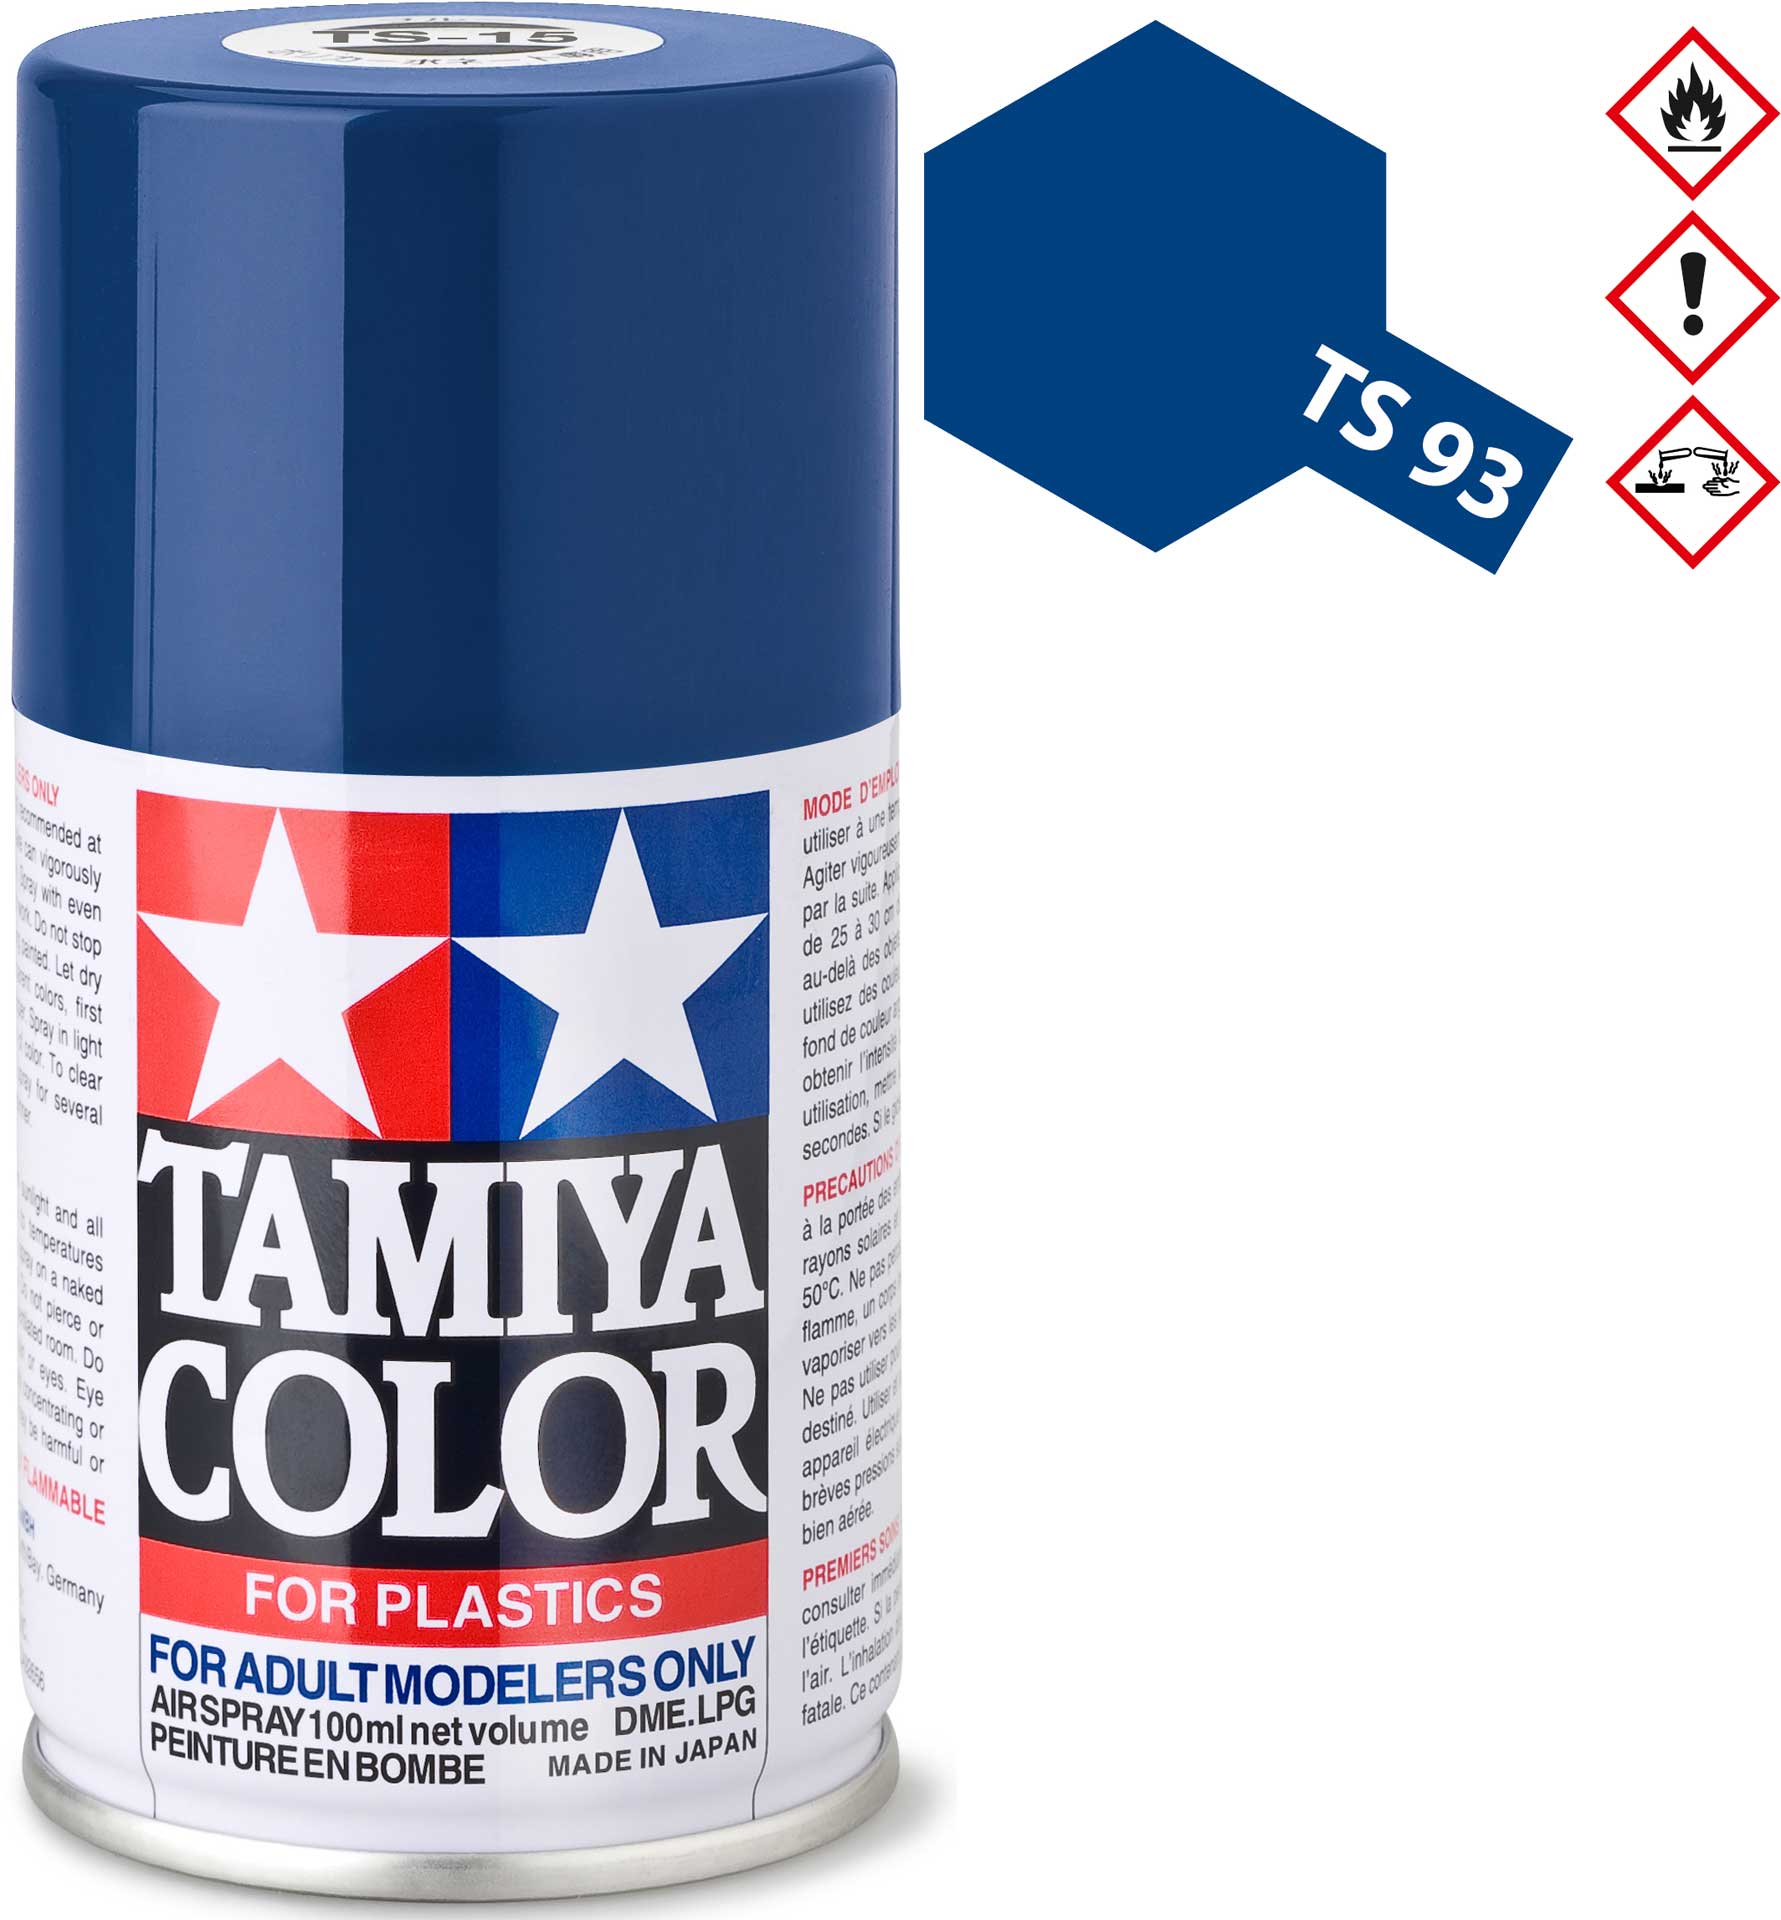 TAMIYA TS-93 Pure Blue brillant plastique Spray 100ml